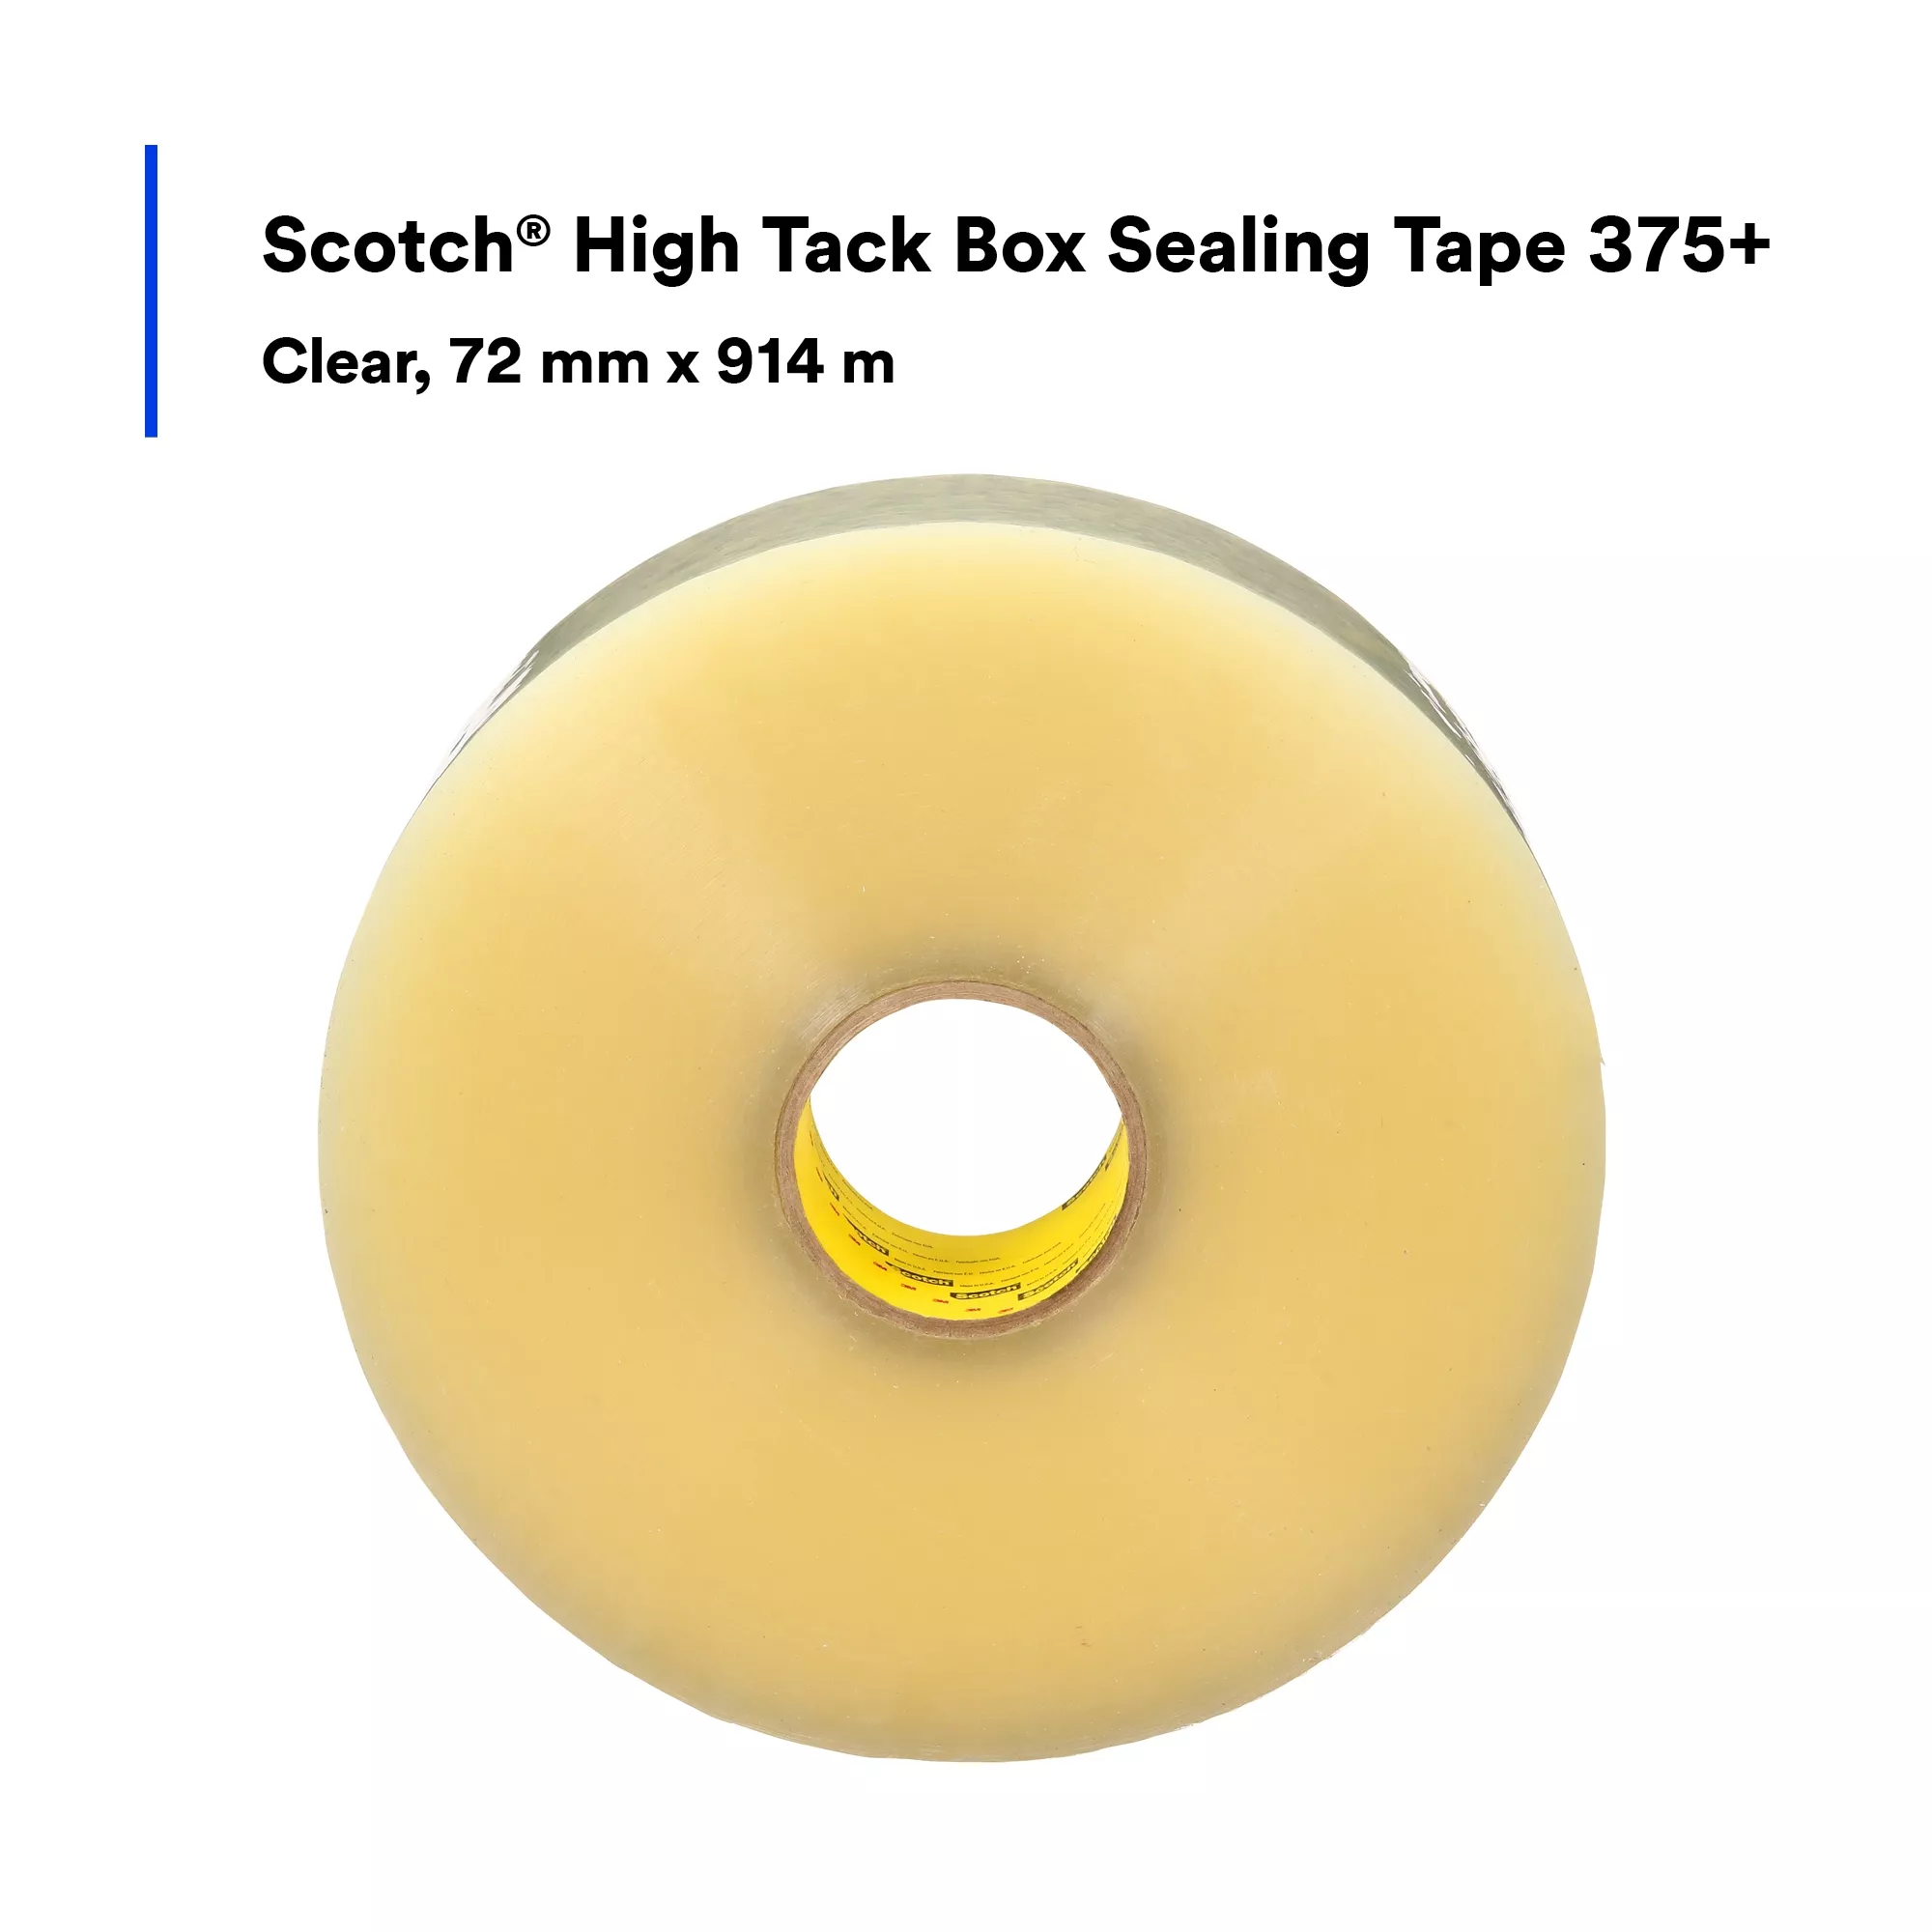 SKU 7100216187 | Scotch® High Tack Box Sealing Tape 375+